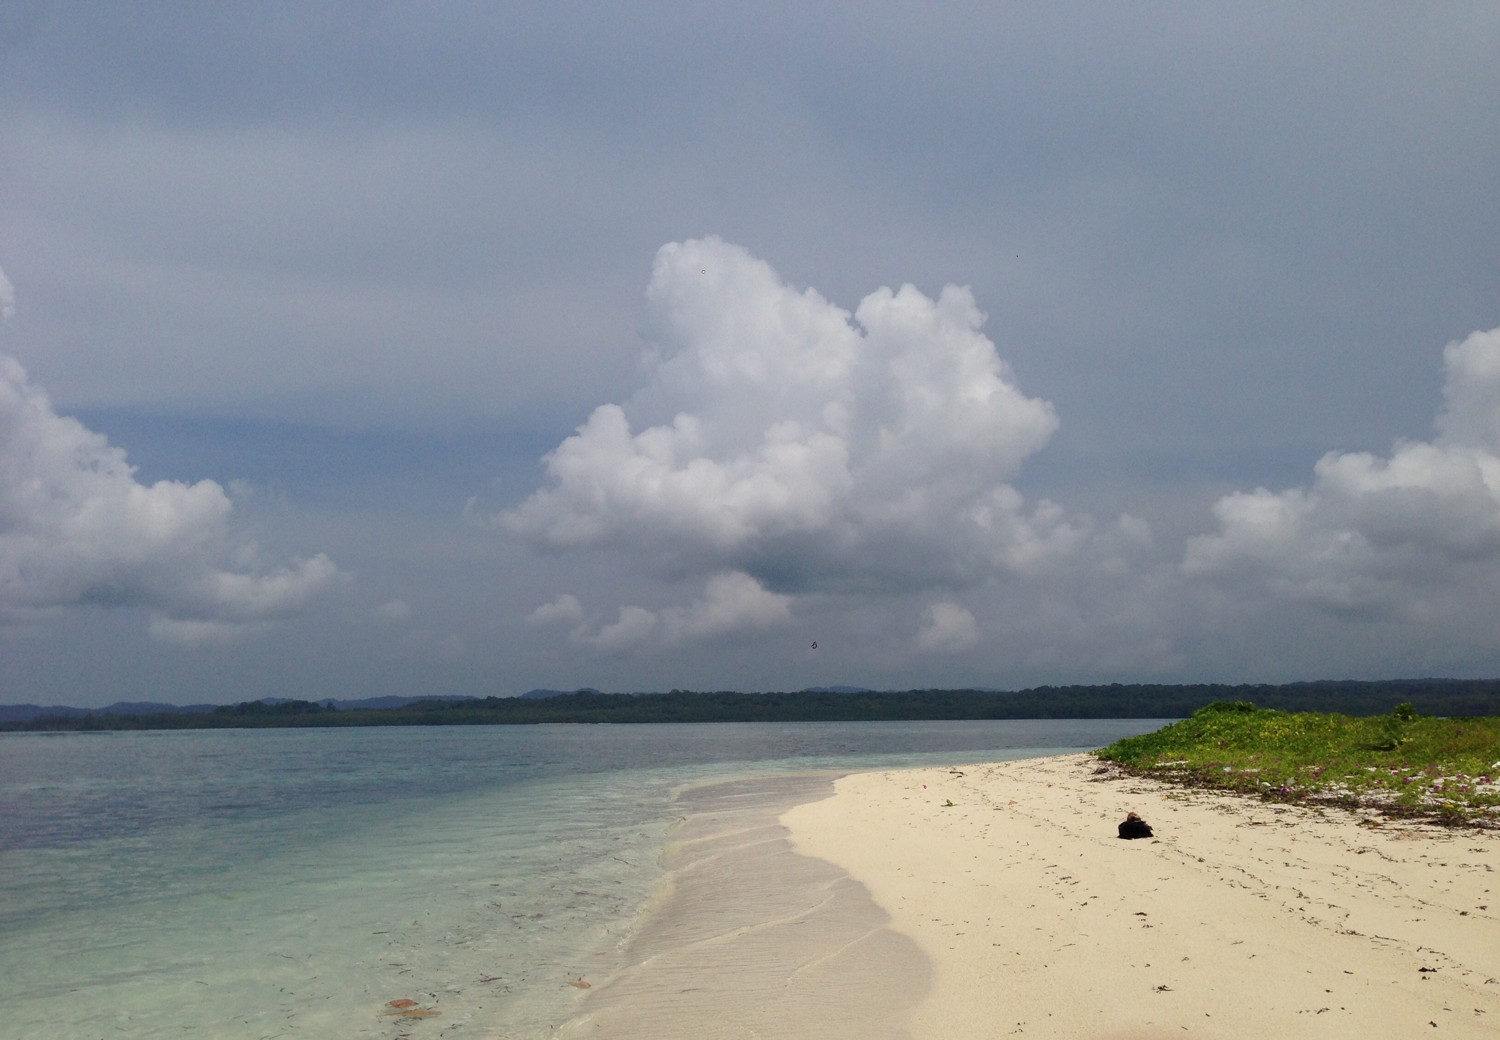 Pulau Enggano